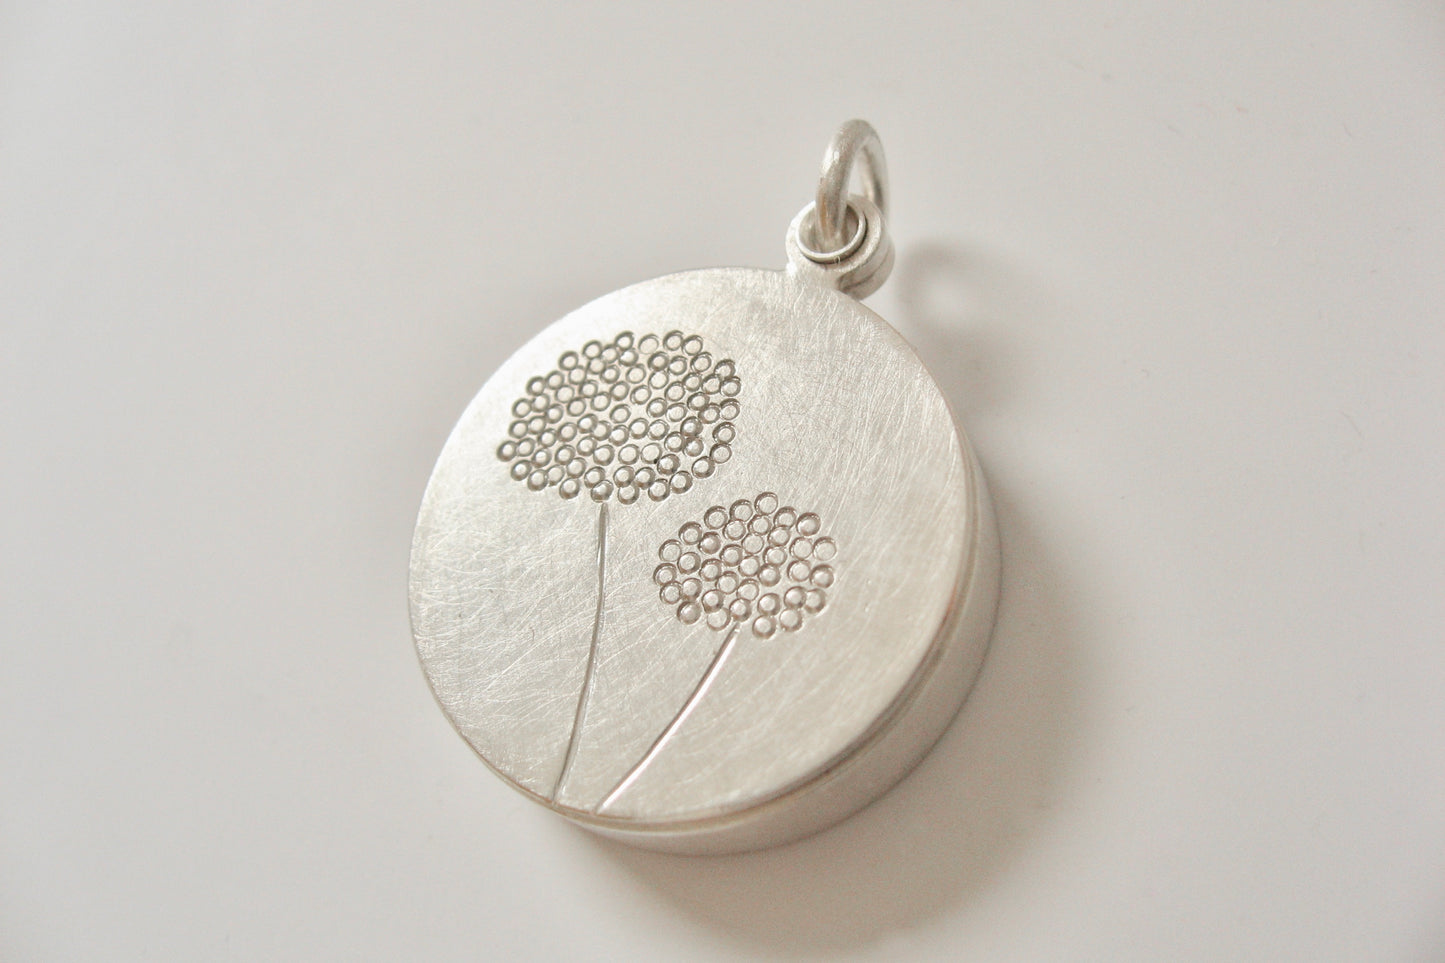 elegant floating locket filled with forget-me-not-seeds in sterling silver with dandelions design